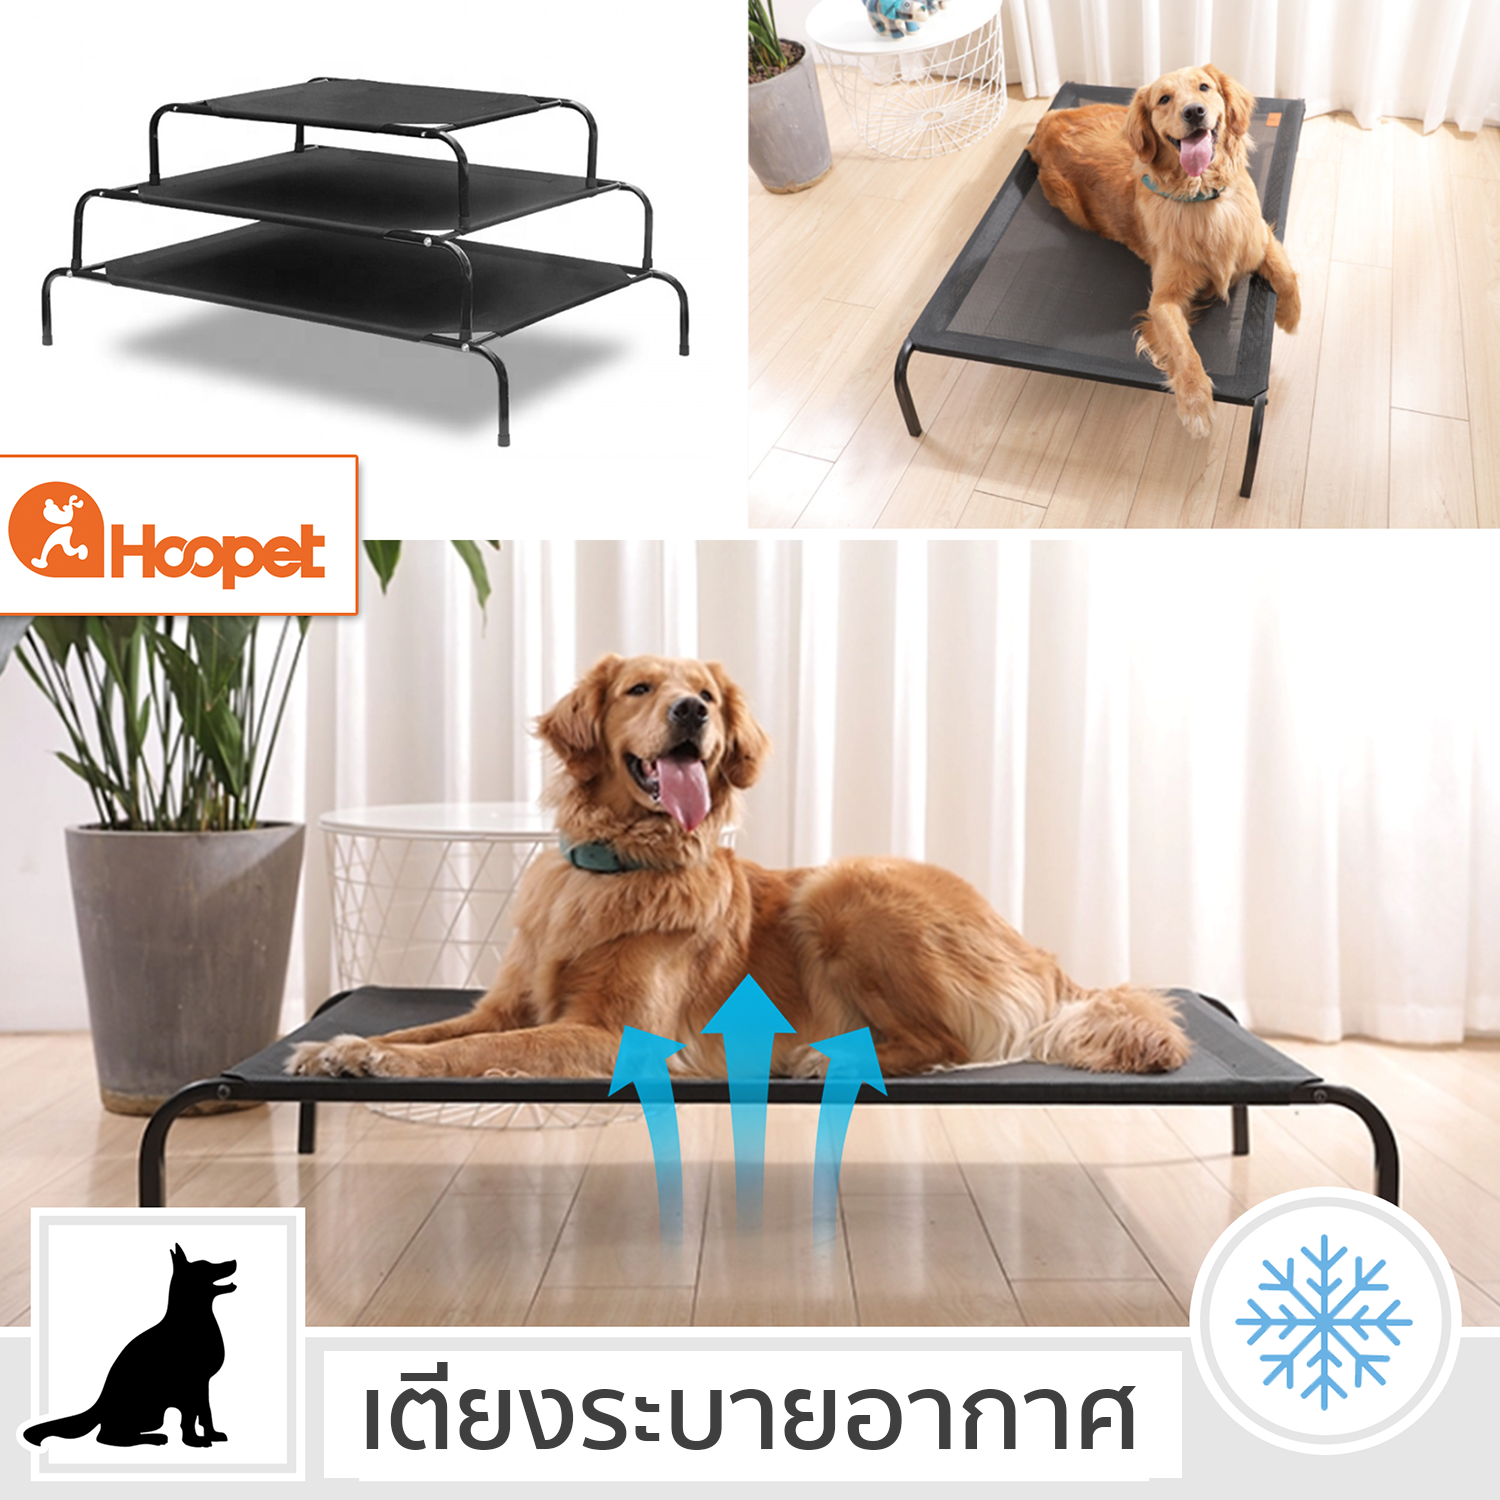 HOOPET เตียงสุนัข Elevated Dog Bed ที่นอนสุนัข แบบยกสูง ผ้าตาข่าย ป้องกันการกดทับ ที่นอนหมา ระบายความร้อน เตียงแมว Size M L XL CleverPet